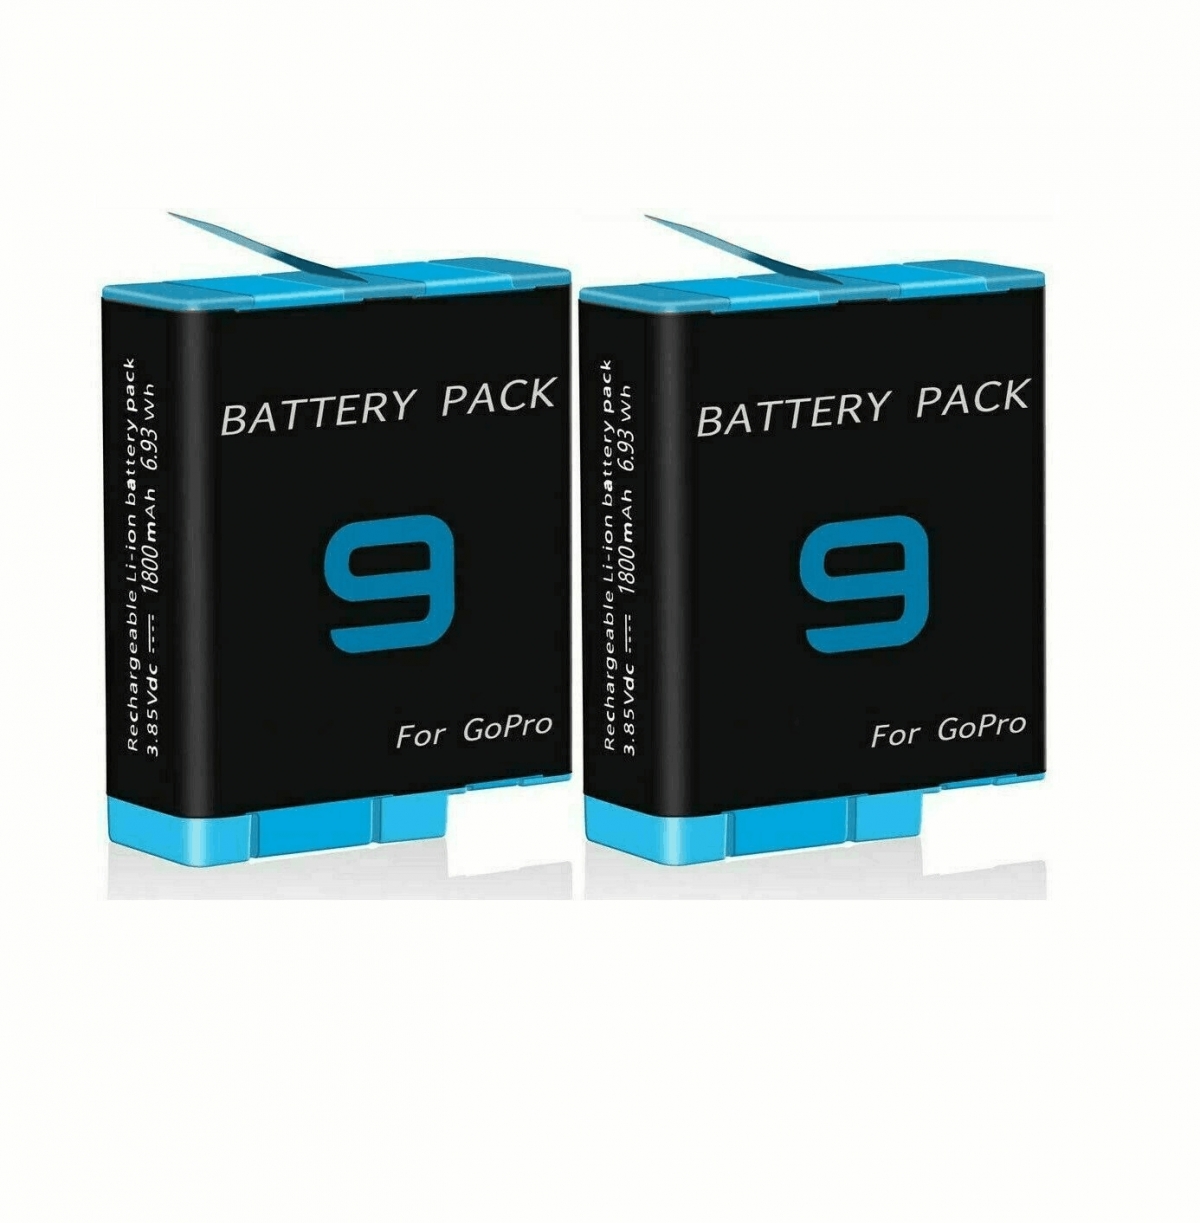 Kotak Pengisi Daya Penyimpanan 3 Slot +2 Baterai Untuk GoPro-CPY, Baterai Laptop, Adaptor Laptop, Pengisi daya Laptop, Baterai Dell, Baterai Apple, Baterai HP